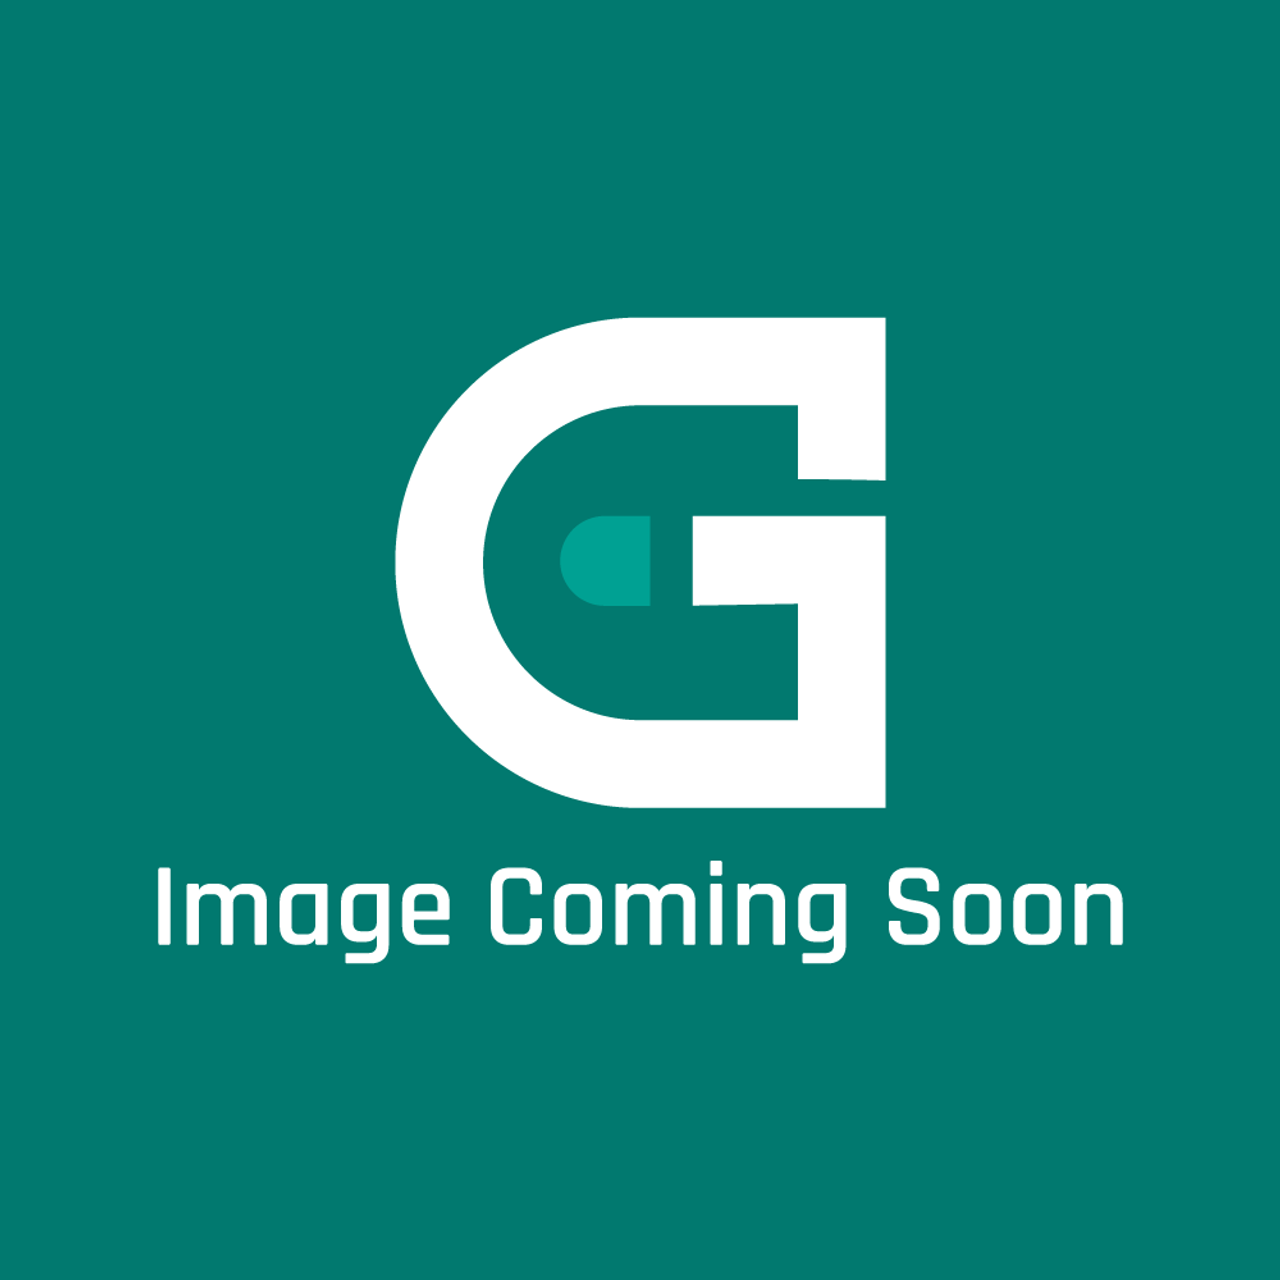 AGA Marvel M0132 - Gsd C/W Solenoid (Ng) P032273 - Image Coming Soon!